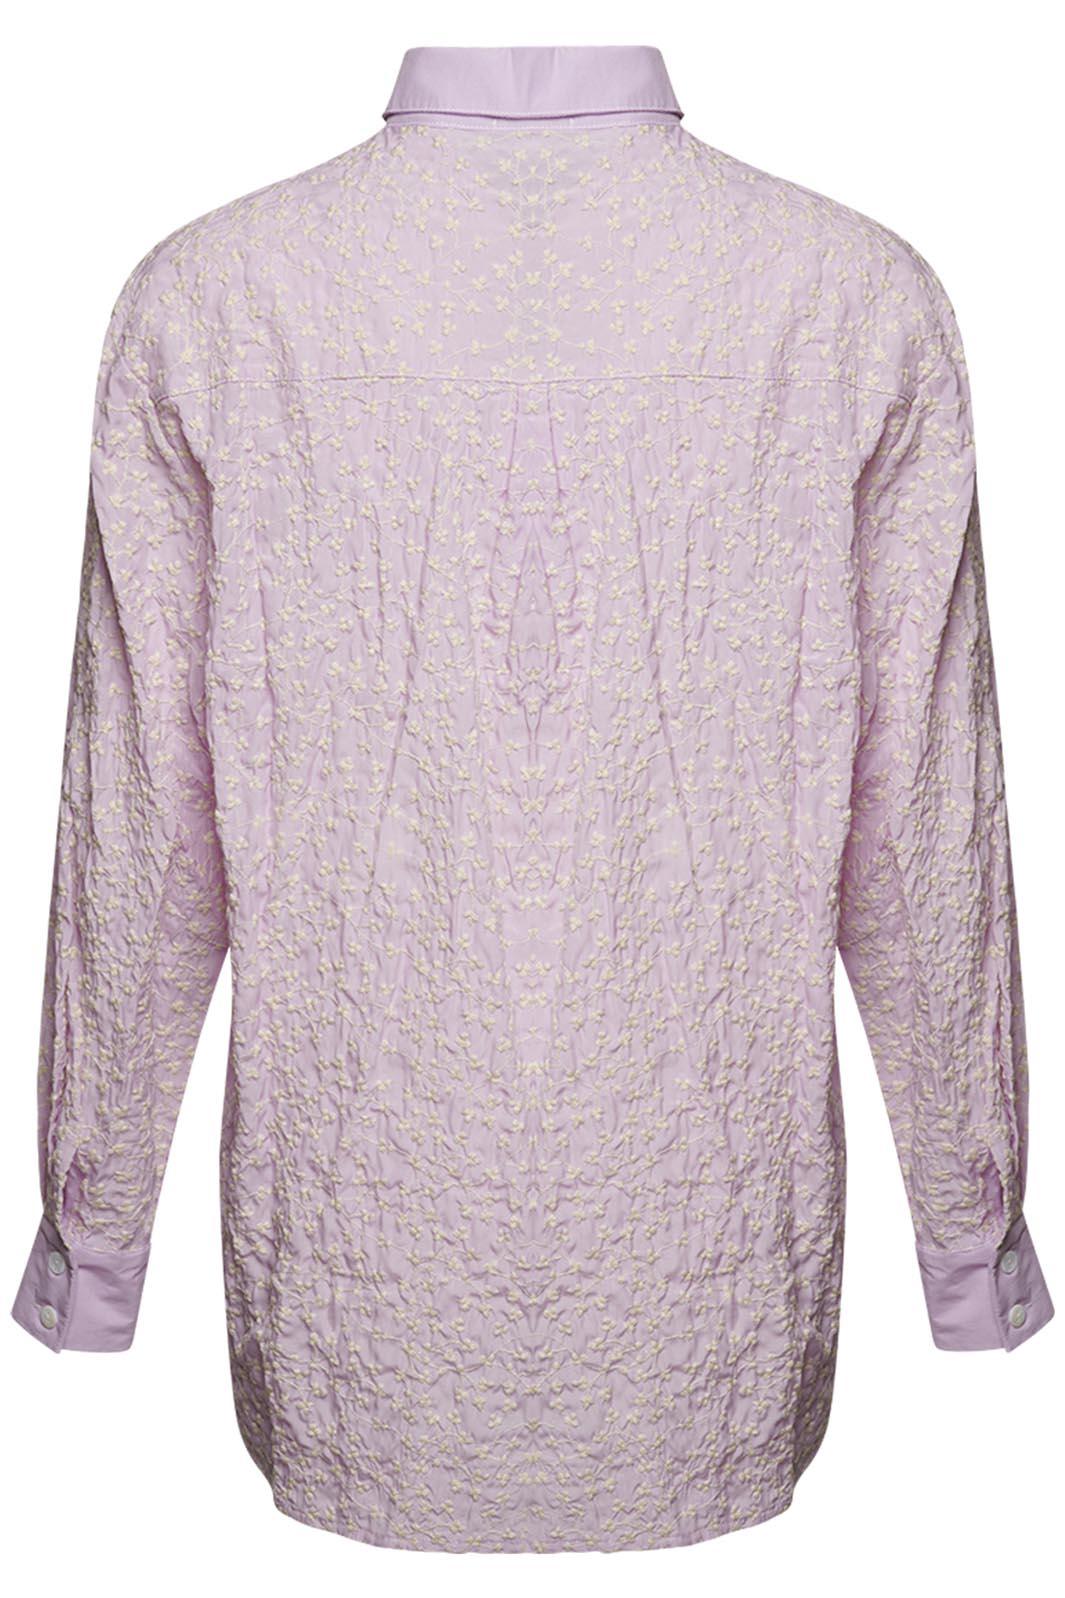 Forudbestilling - Noella - Norah Loose Shirt - Lavender (Maj/Juni) Skjorter 